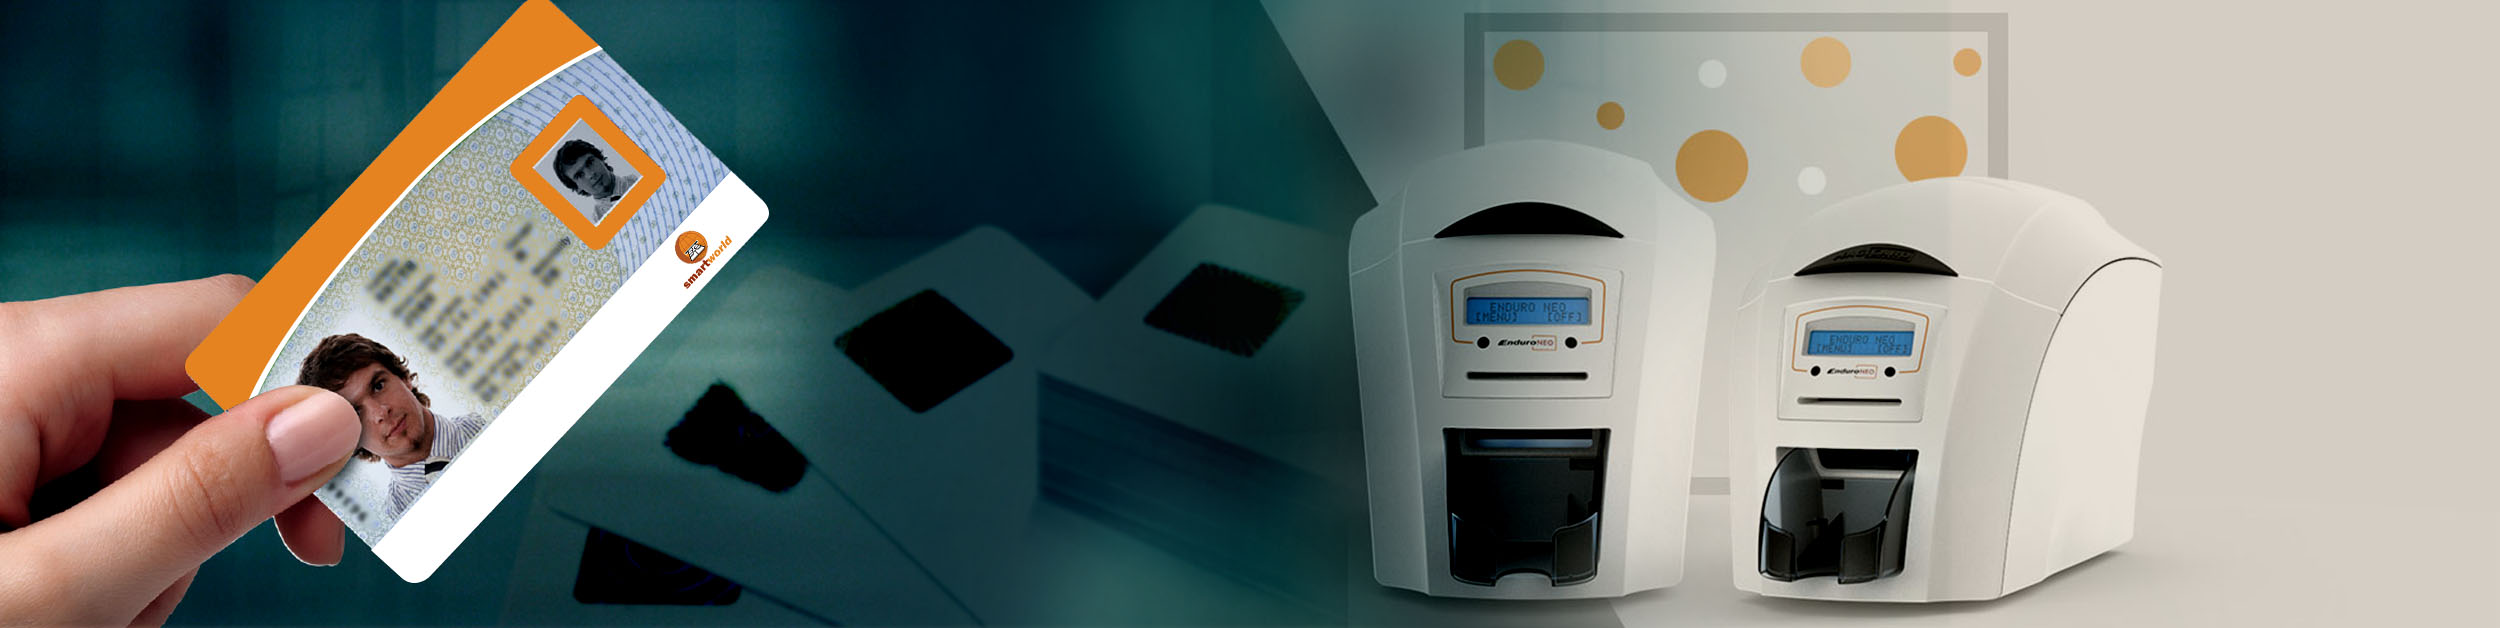 card printers | ID card printers